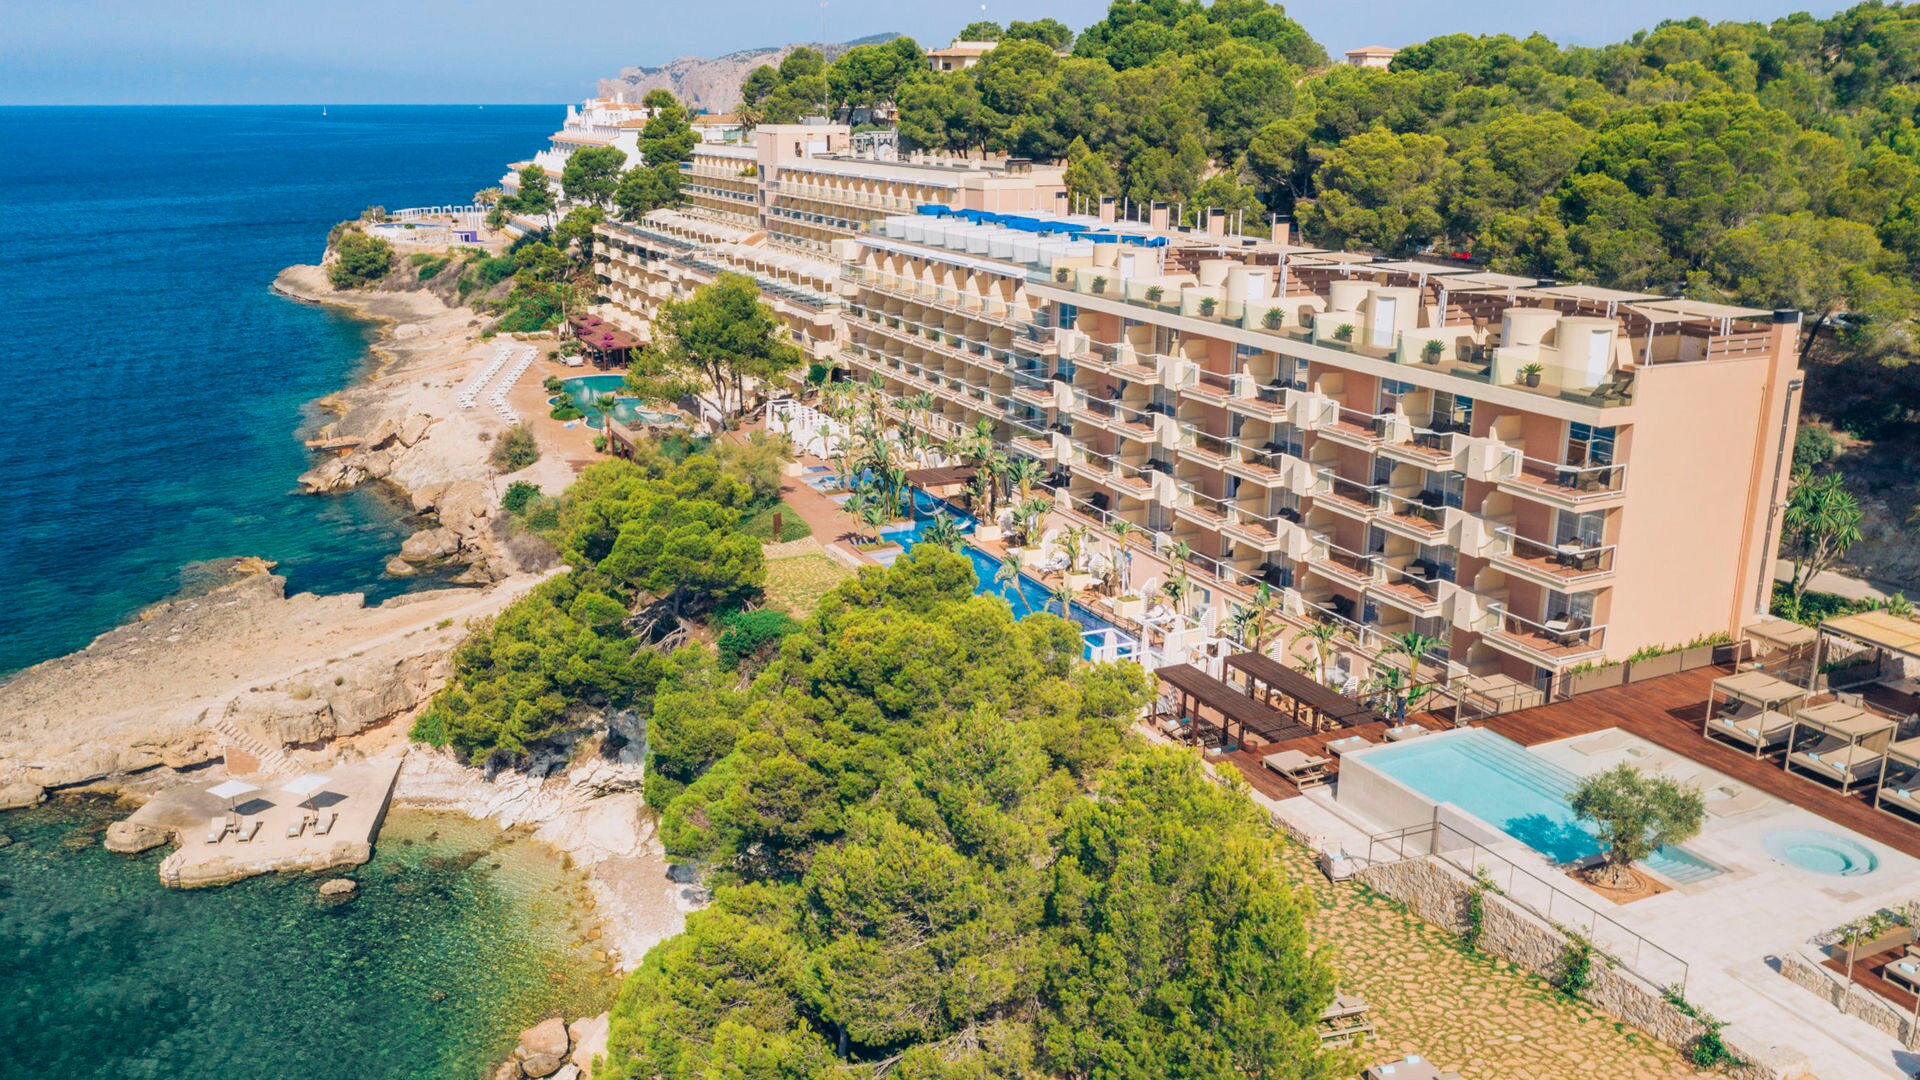 Aerial view of Iberostar Suite Hotel Jardin del Sol, Santa Ponsa, Mallorca